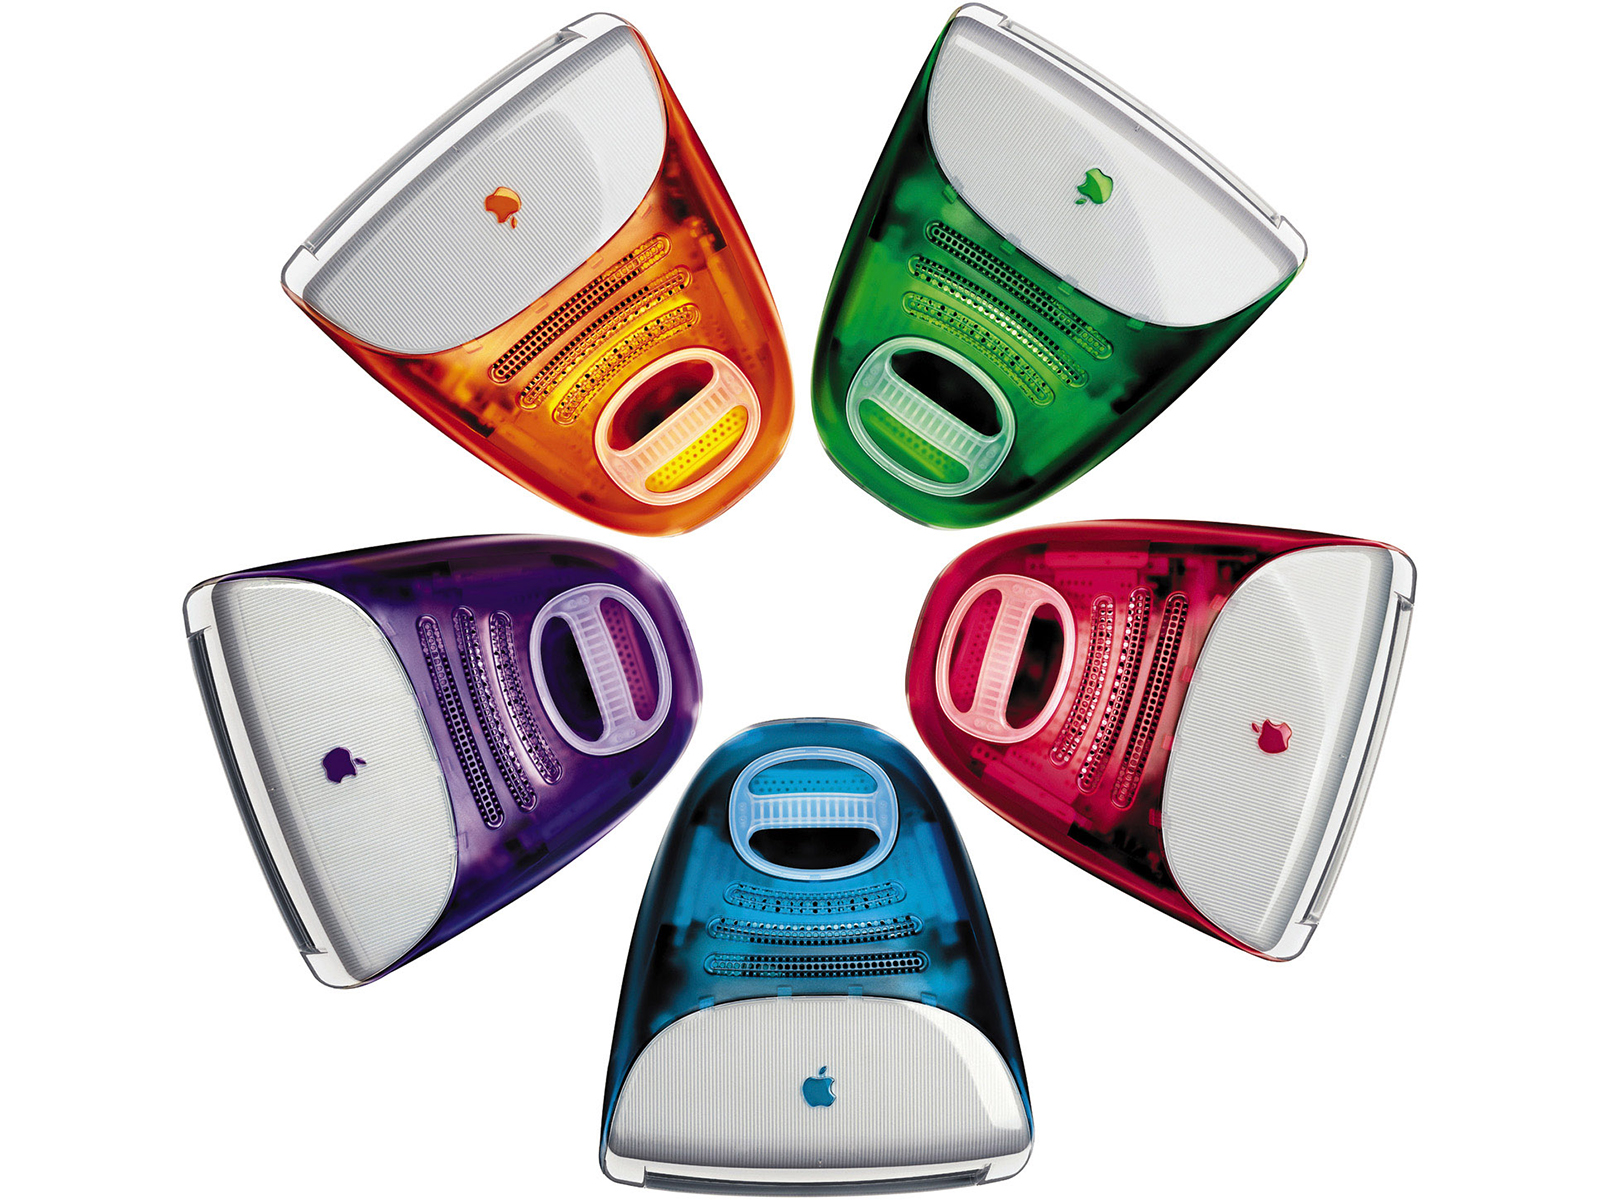 Five brightly colored iMac G3s